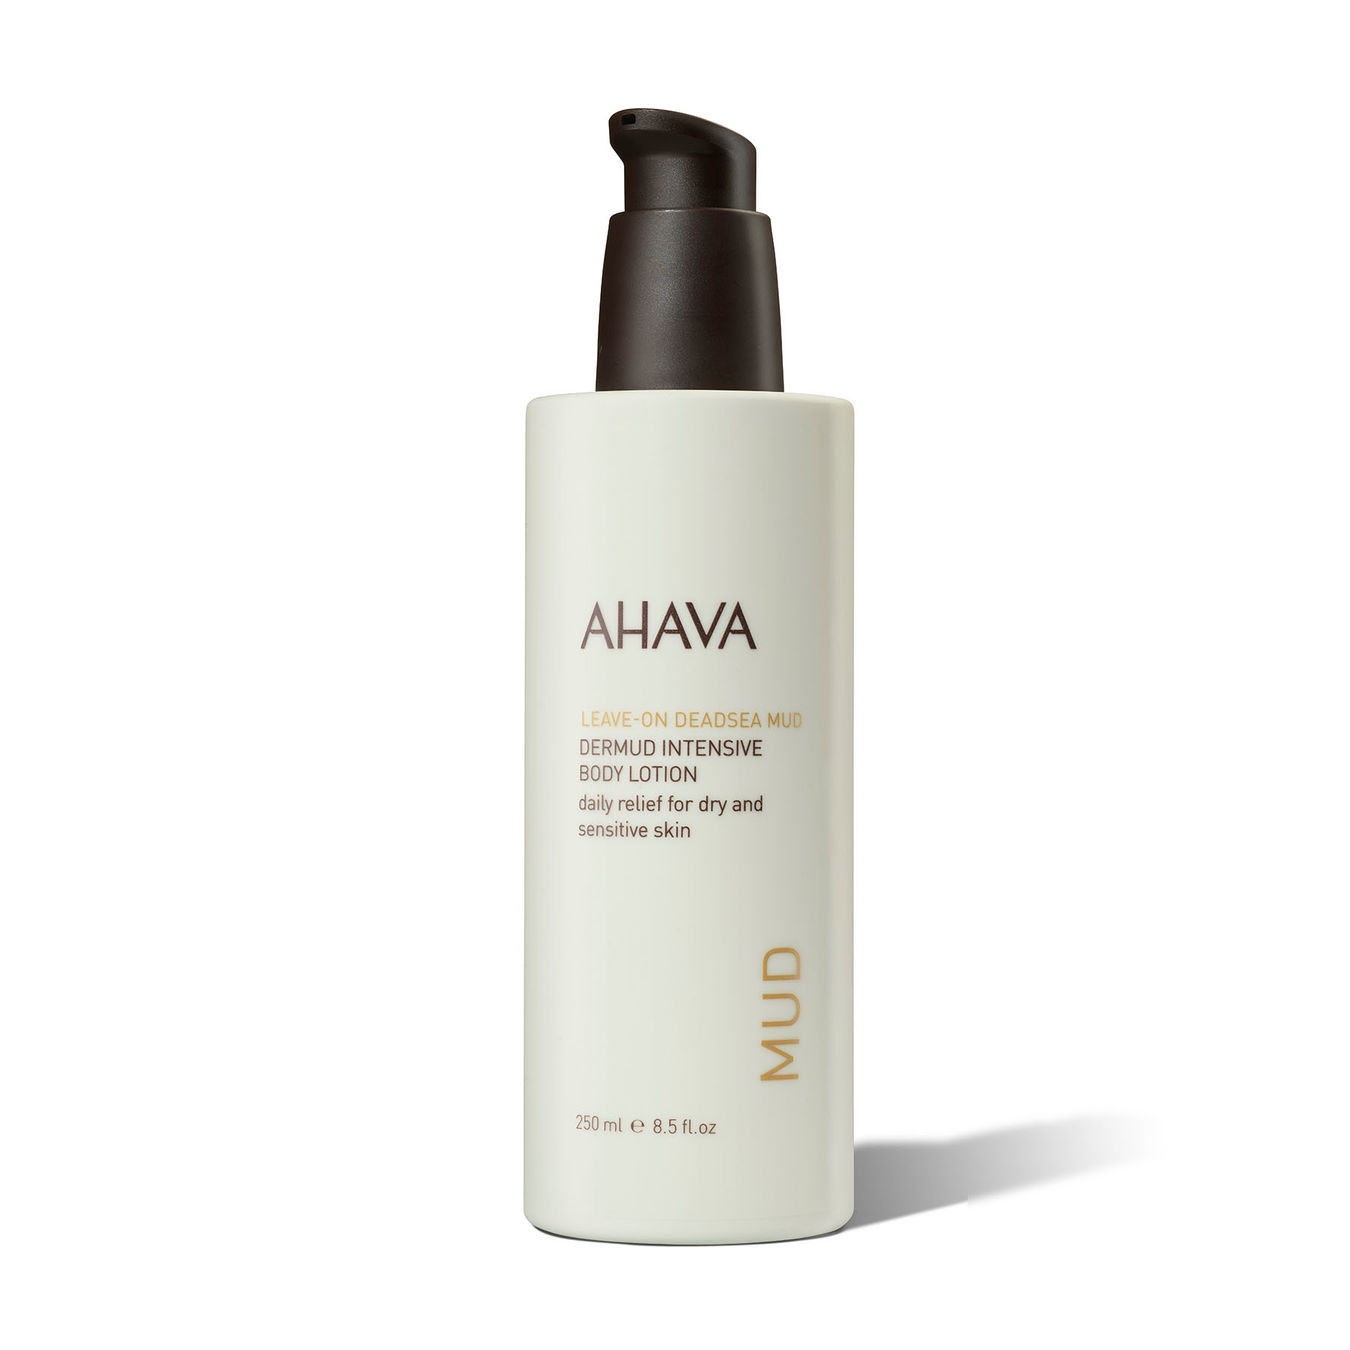 AHAVA Leave-On Deadsea Mud Dermud Intensive Body Lotion 250ml Damen von Ahava